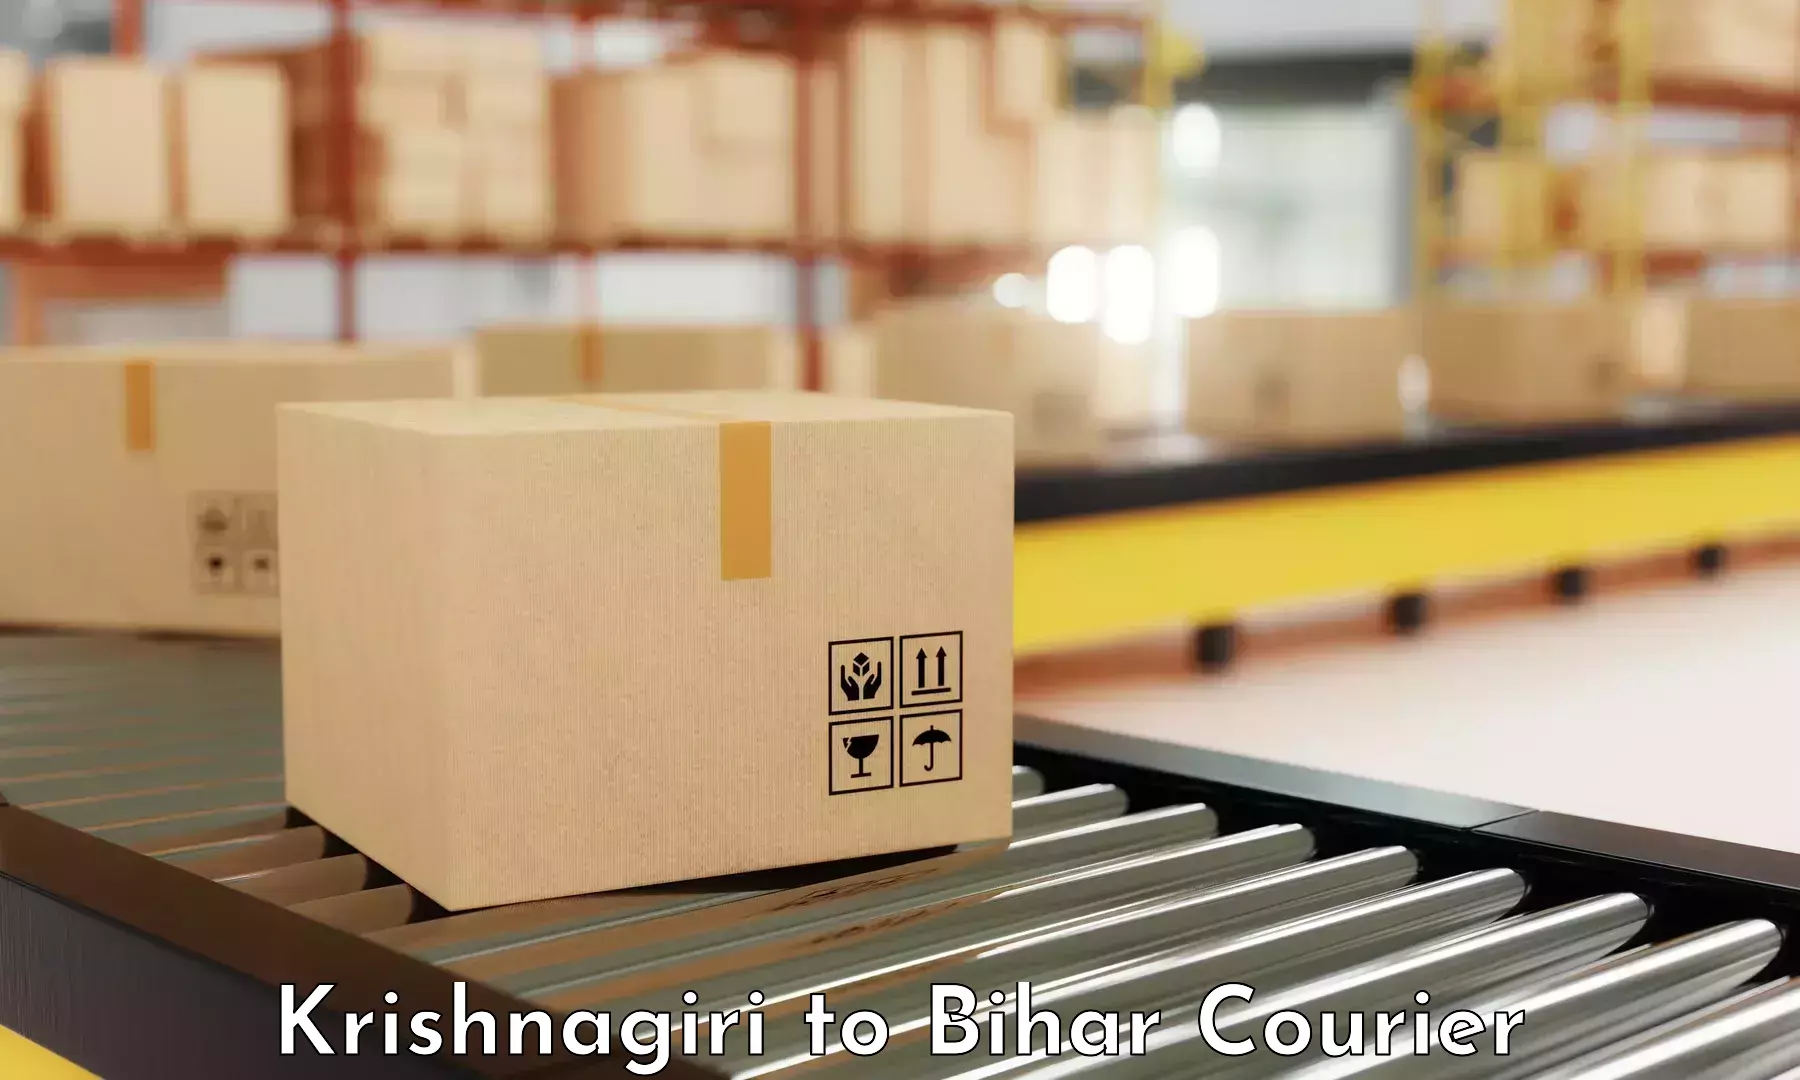 State-of-the-art courier technology Krishnagiri to Sandesh